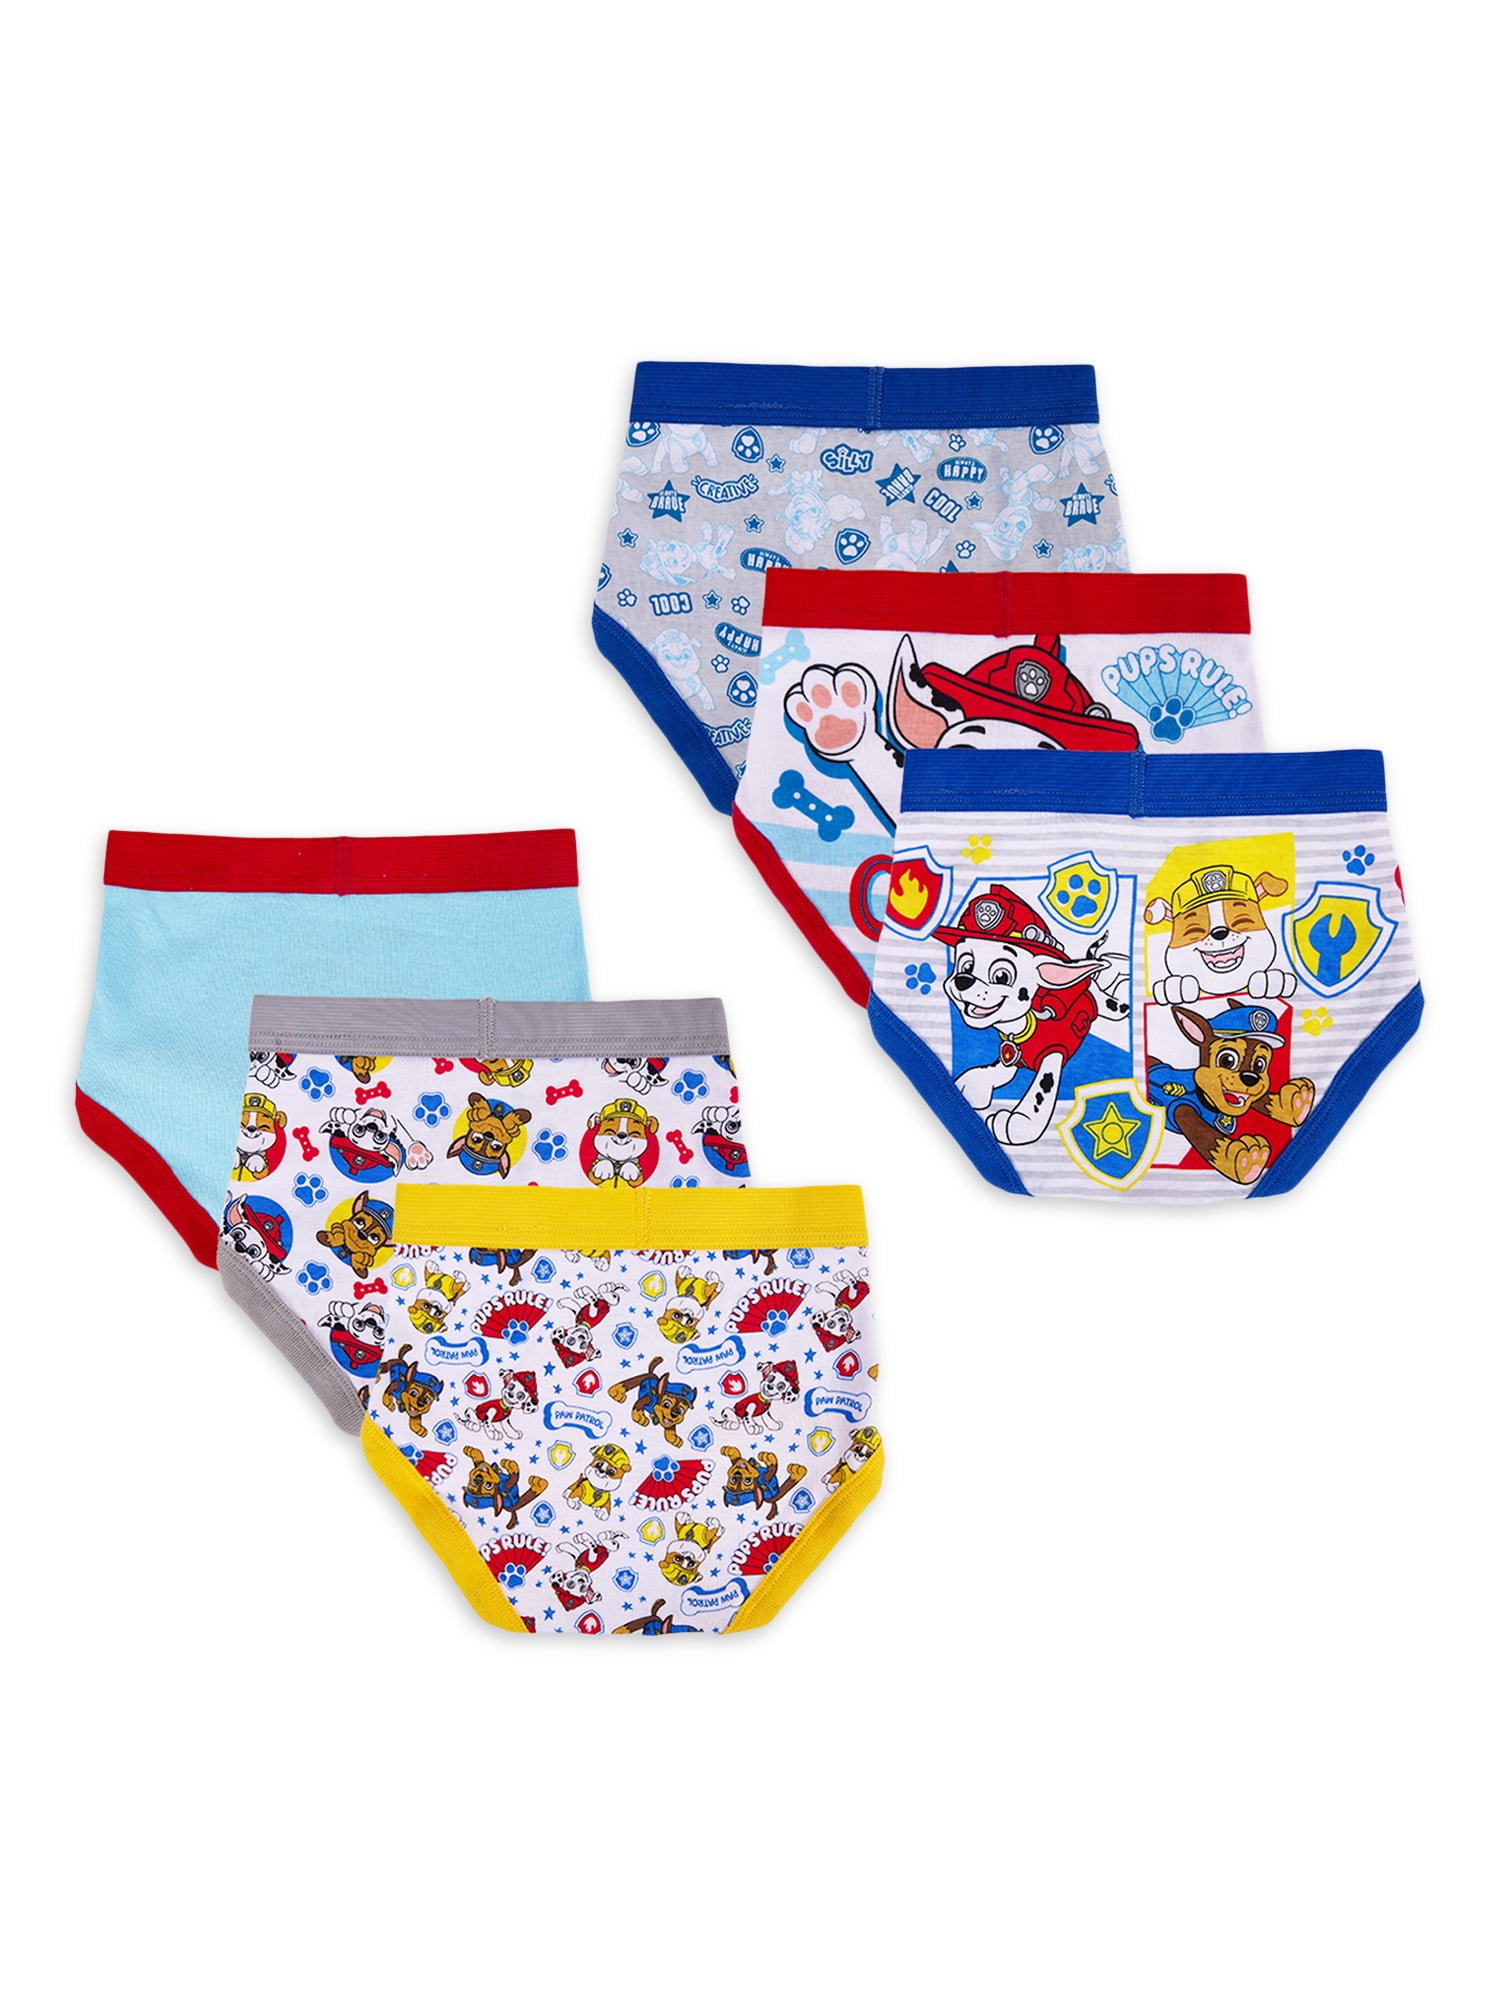 Paw Patrol Toddler Boys Brief Underwear, 7-Pack (Size: 2T-3T / 4T